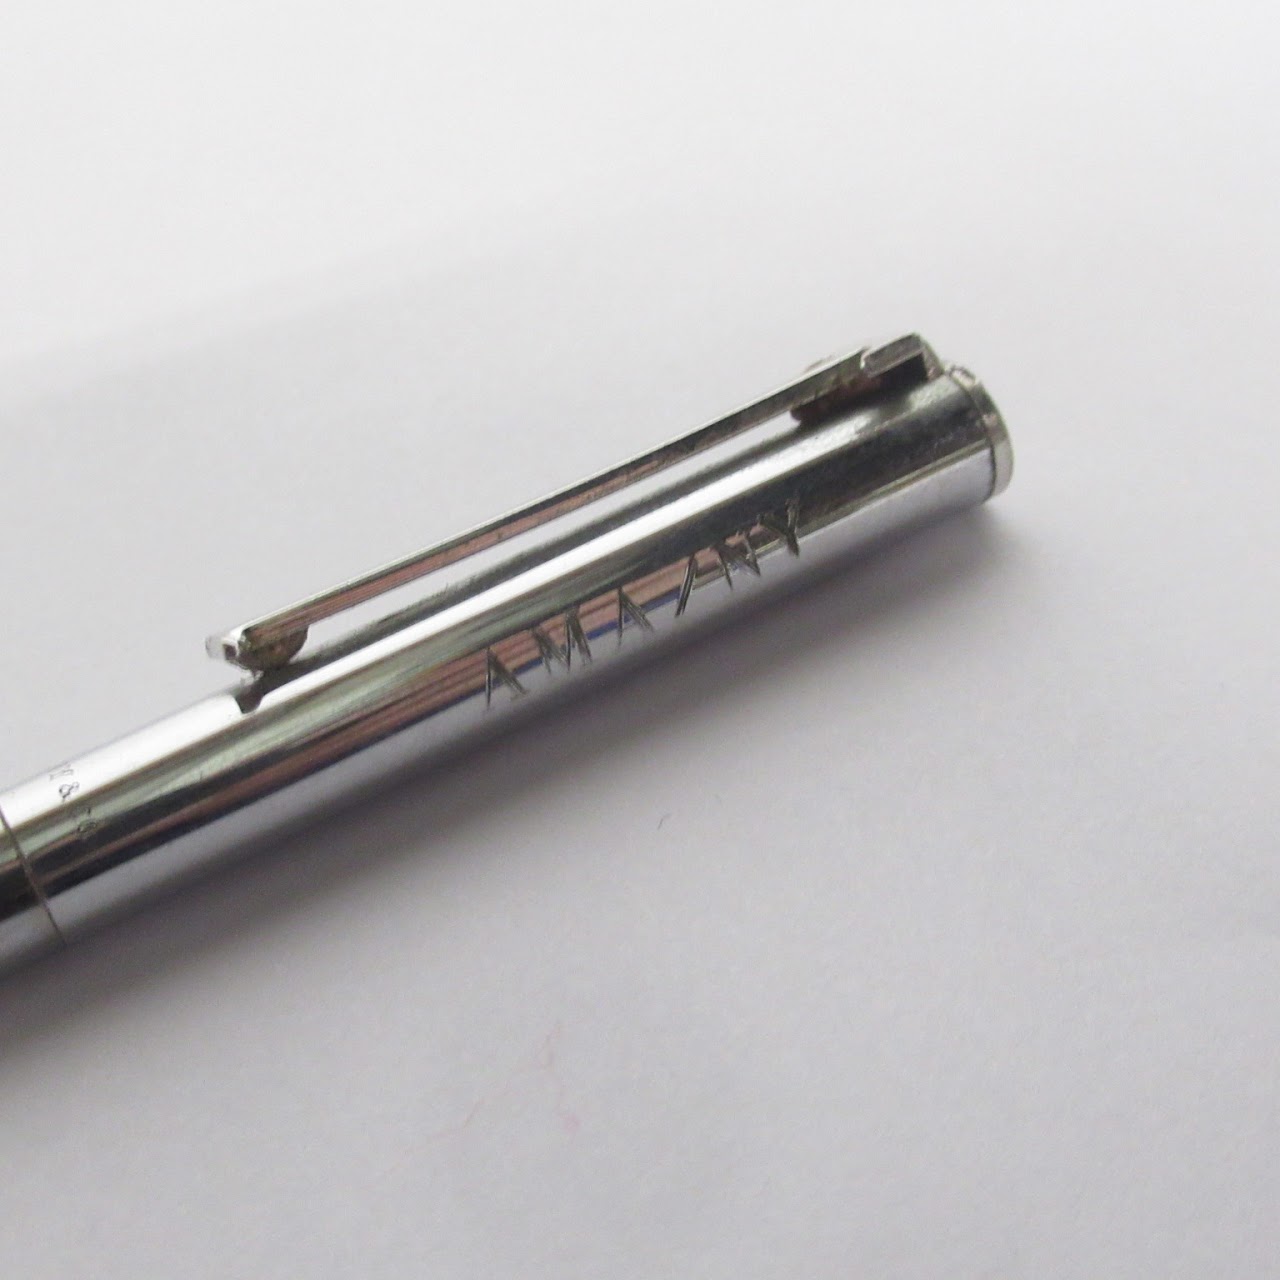 Tiffany & Co. Chrome T-Clip Pen